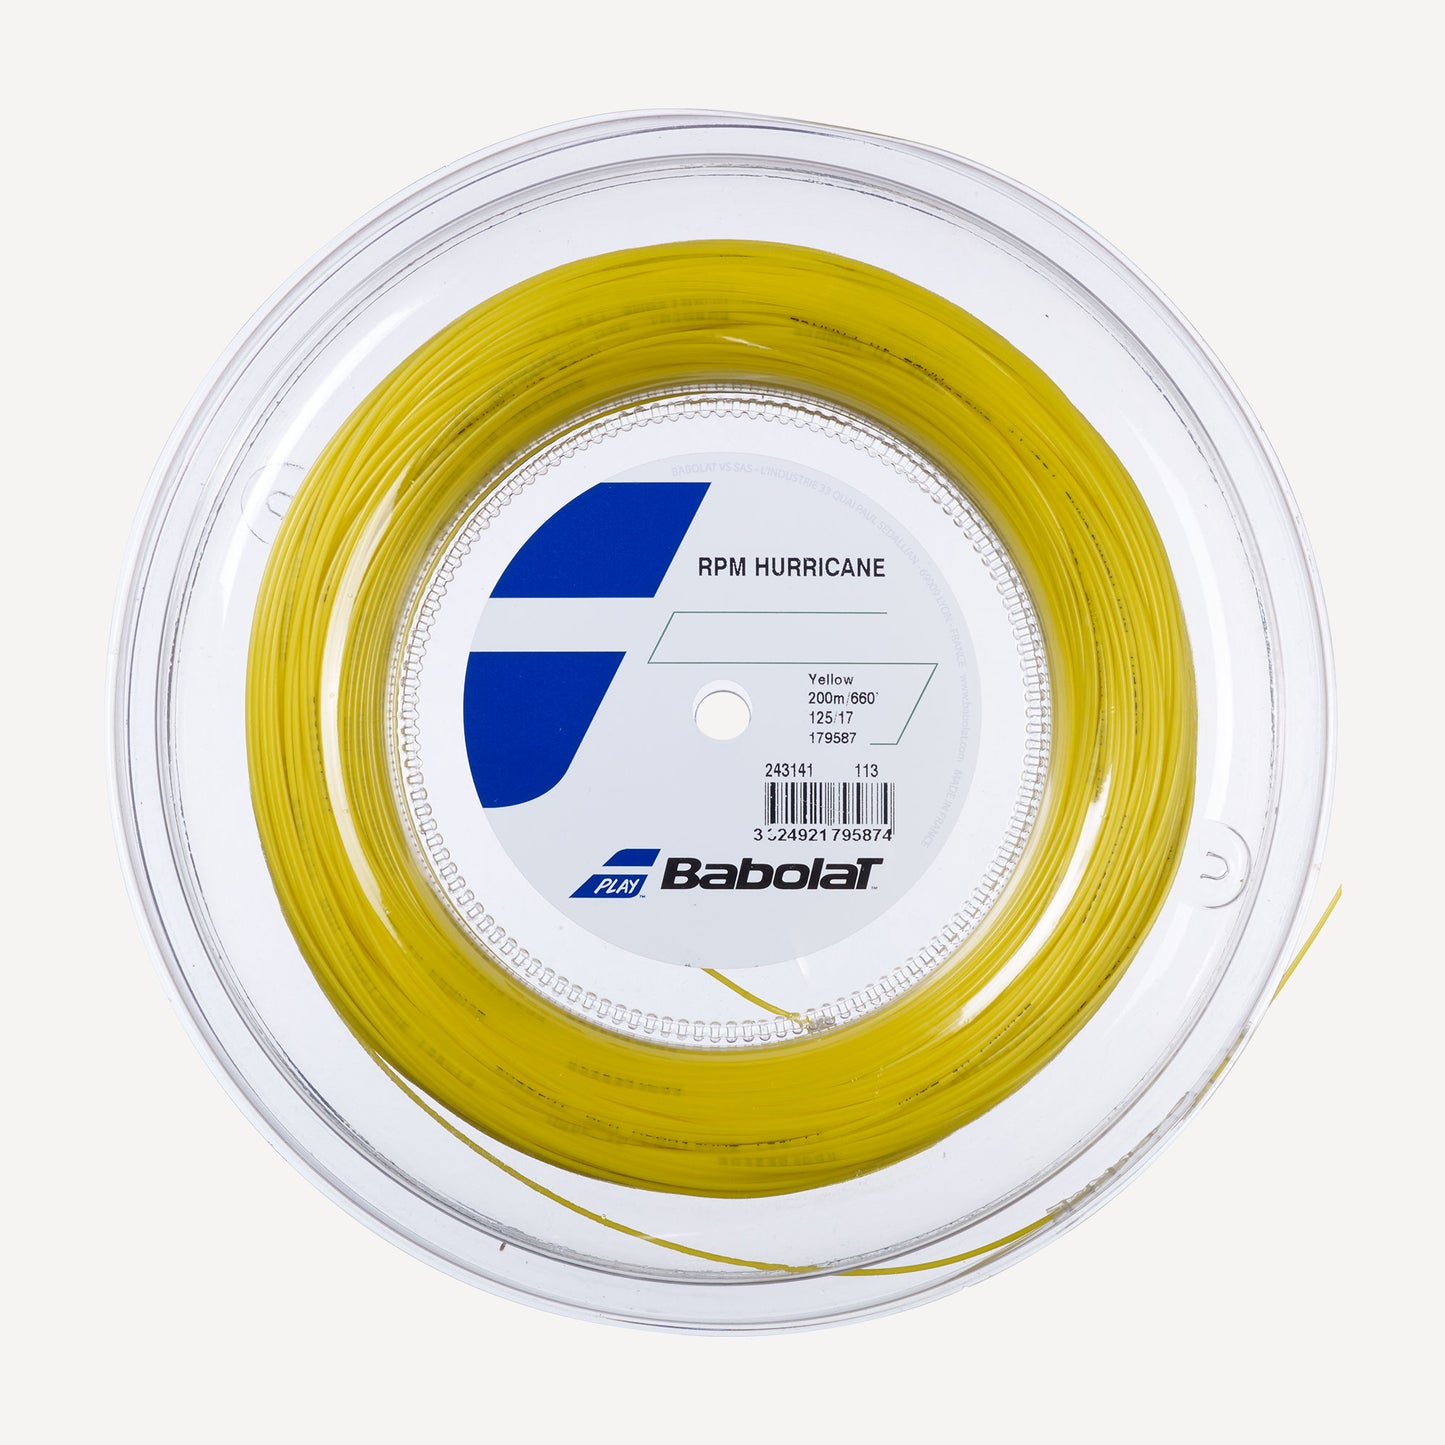 Babolat RPM Hurricane Tennis String Reel 200m Yellow